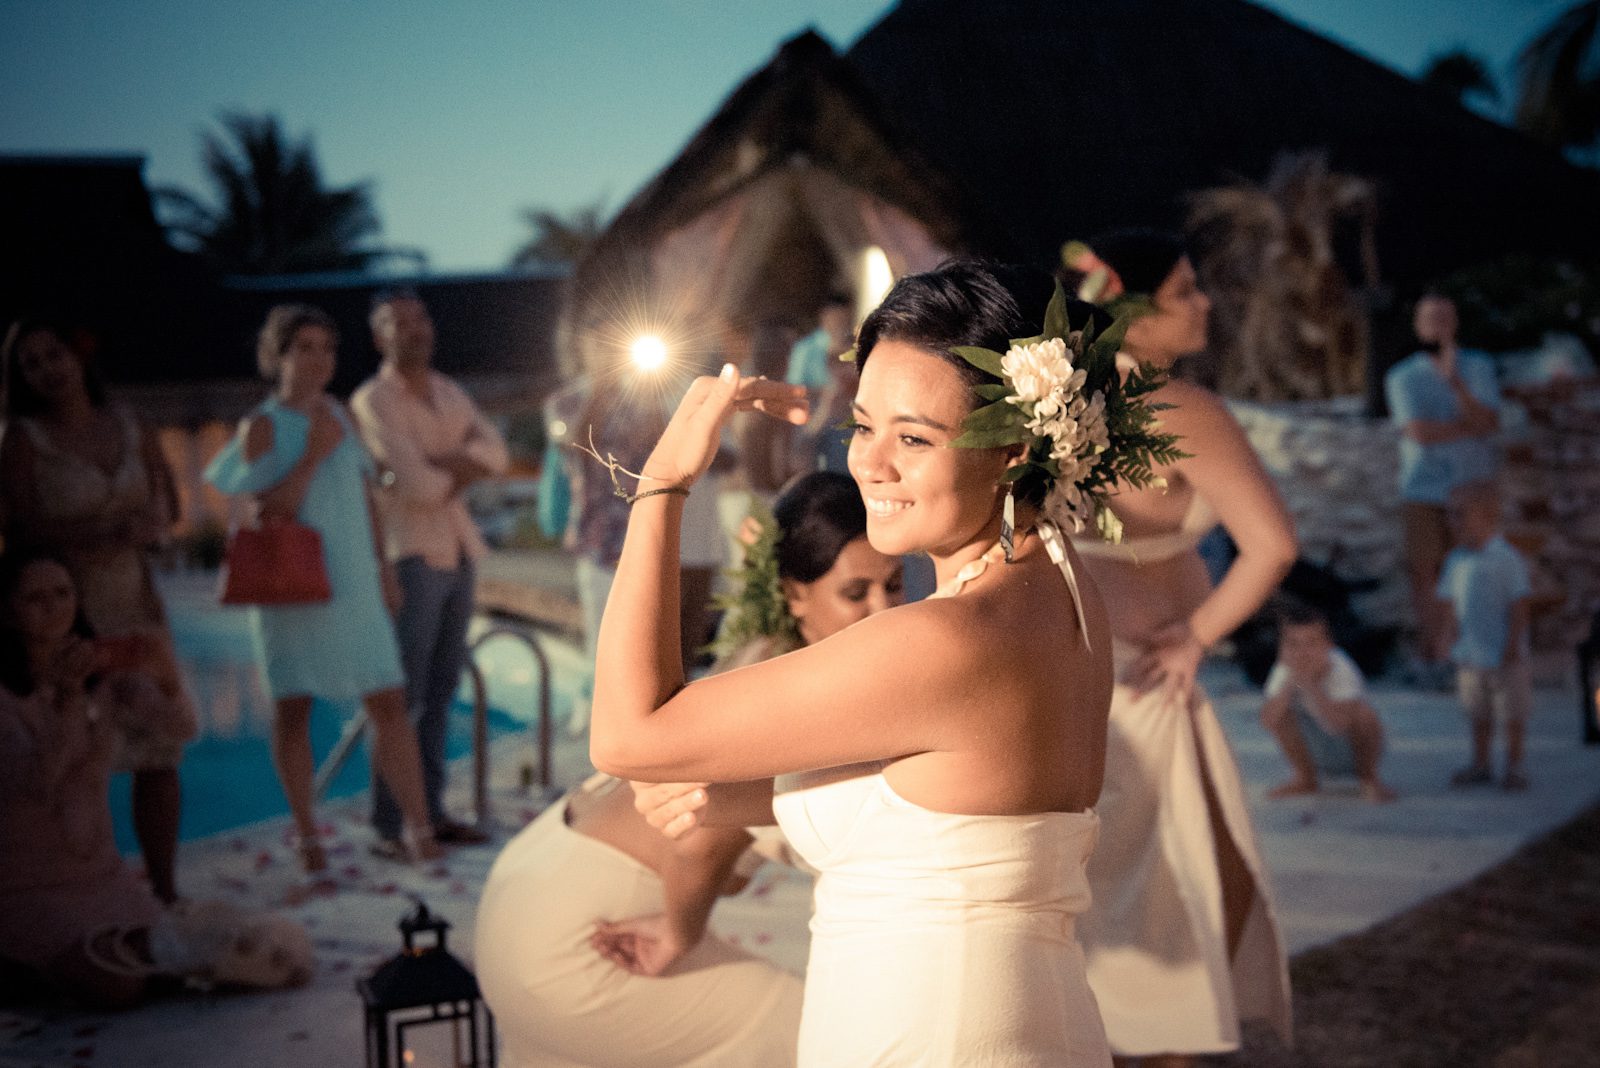 Photographe mariage Tahiti Moorea